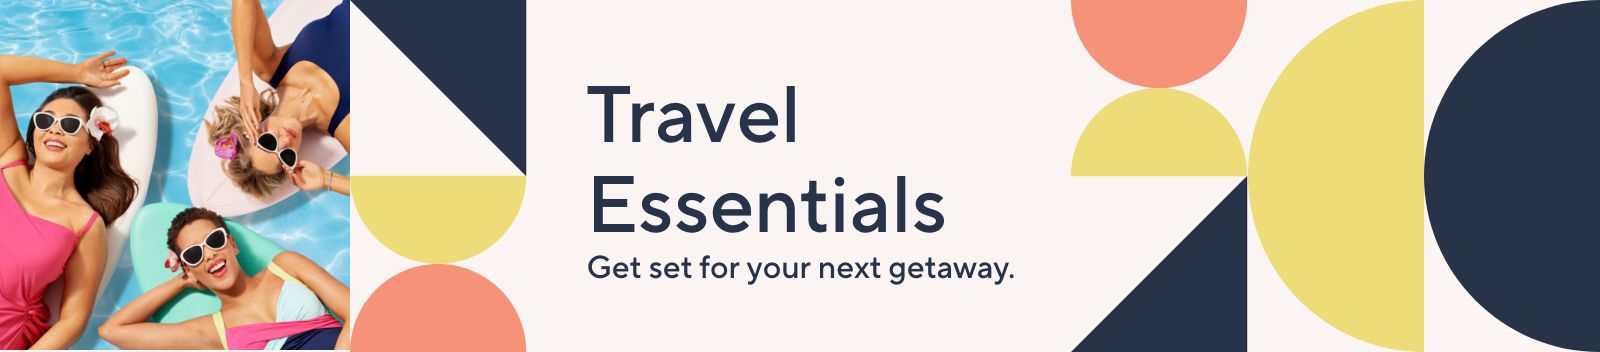 Travel Essentials: Get set for your next getaway.